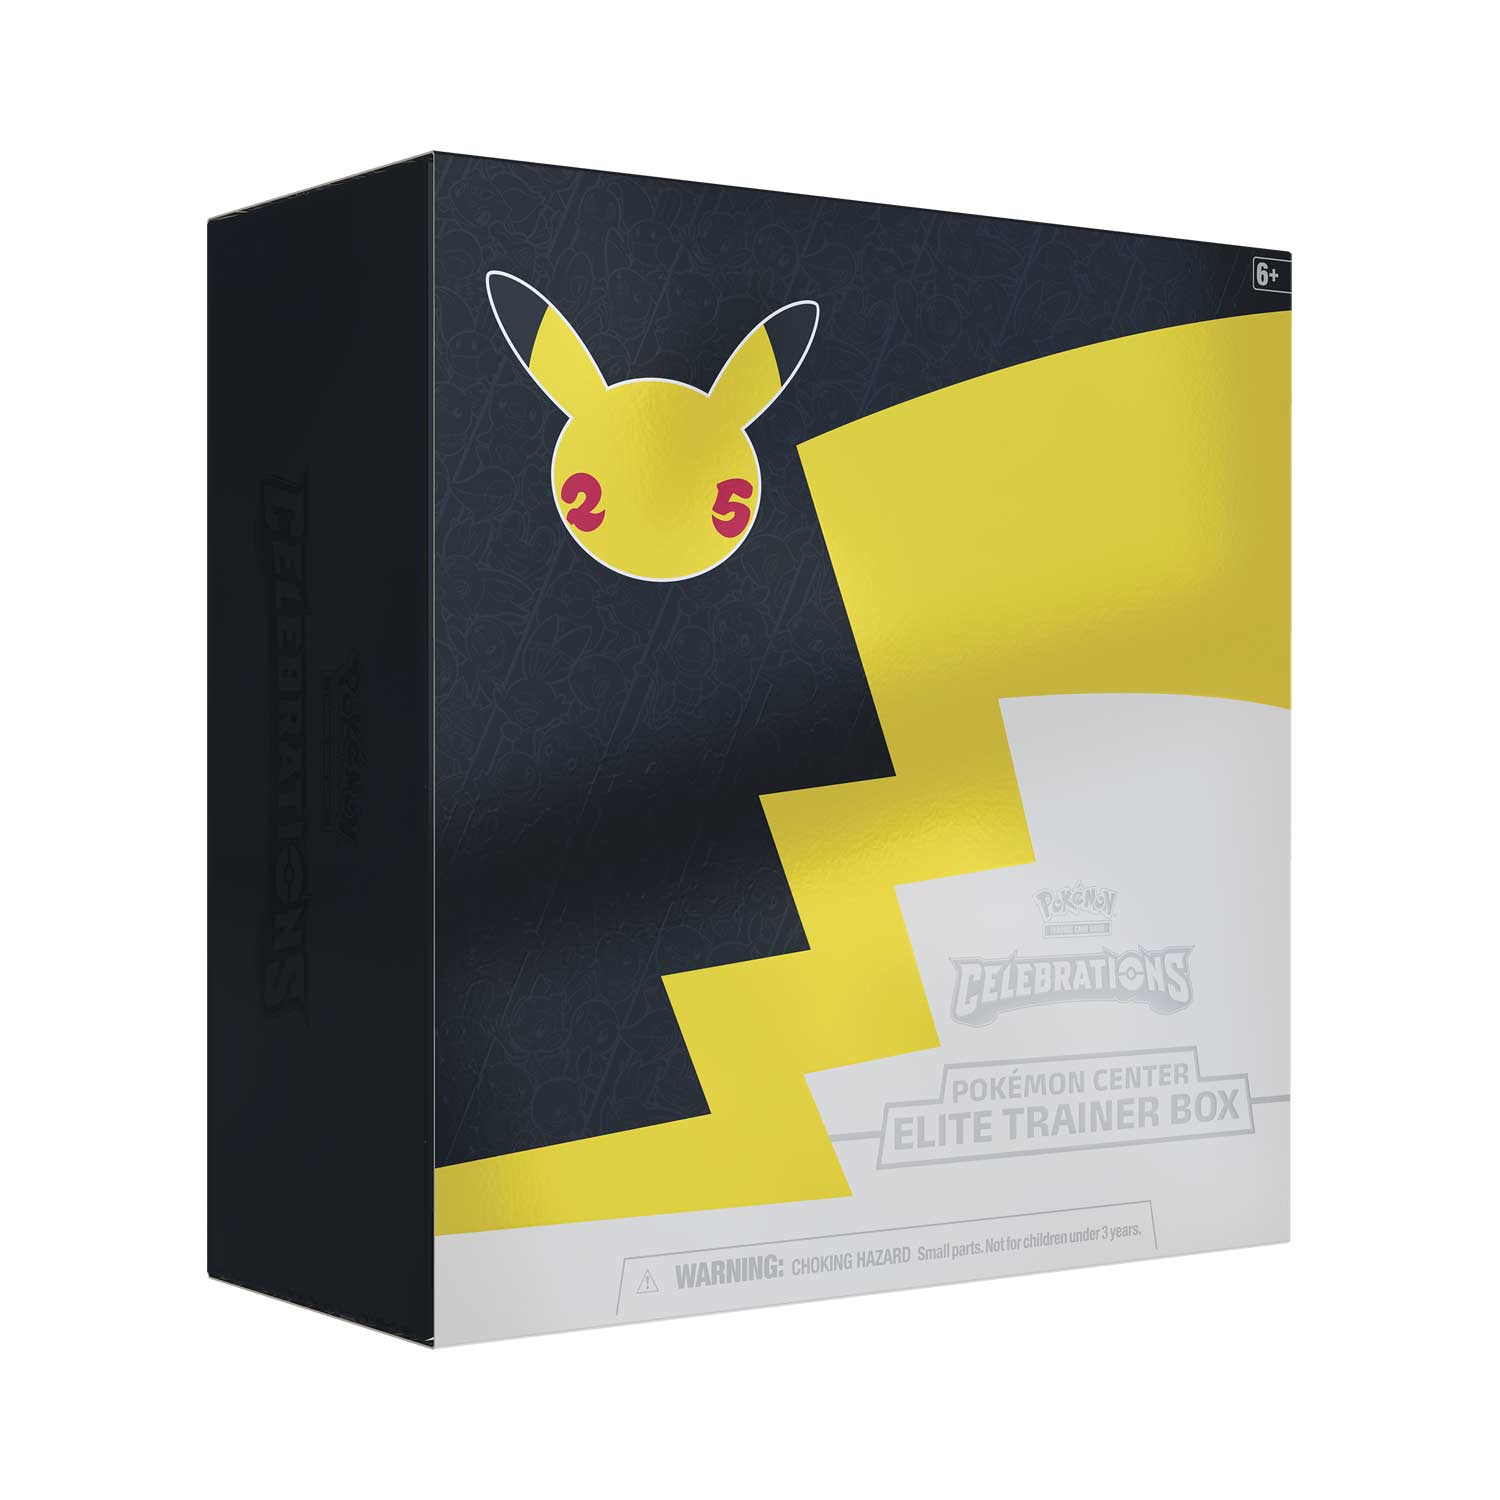 Pokémon TCG: Celebrations Pokémon Center Elite Trainer Box $64.99